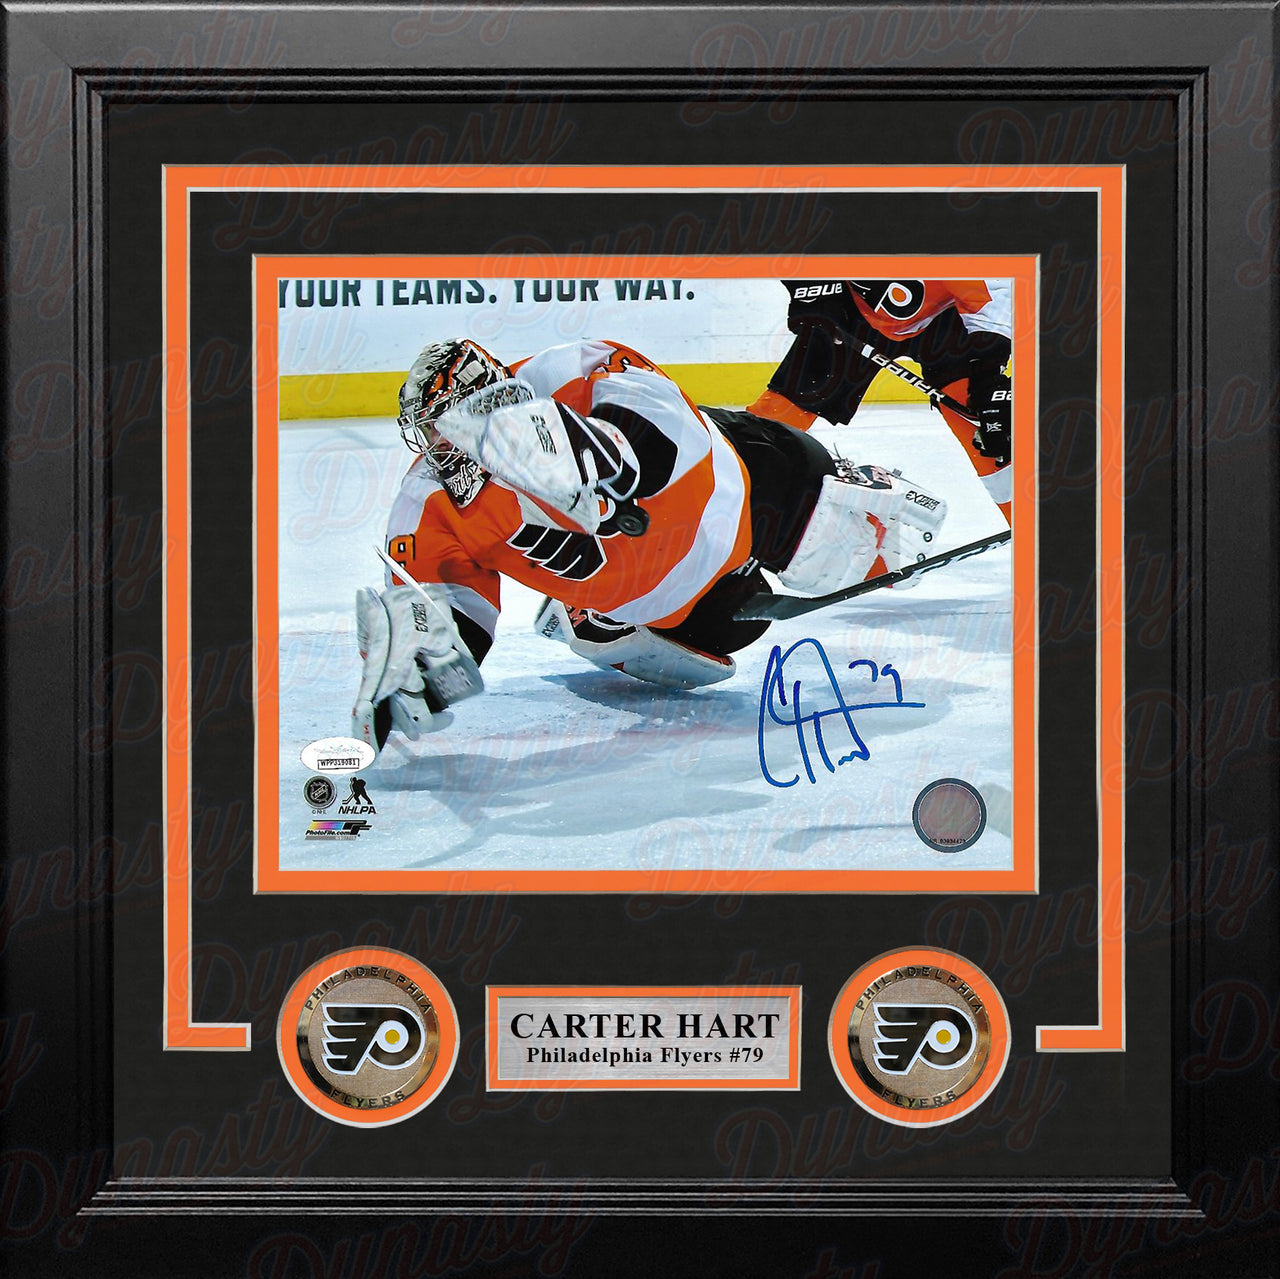 Carter Hart Philadelphia Flyers Autographed 11 x 14 Pregame Photo